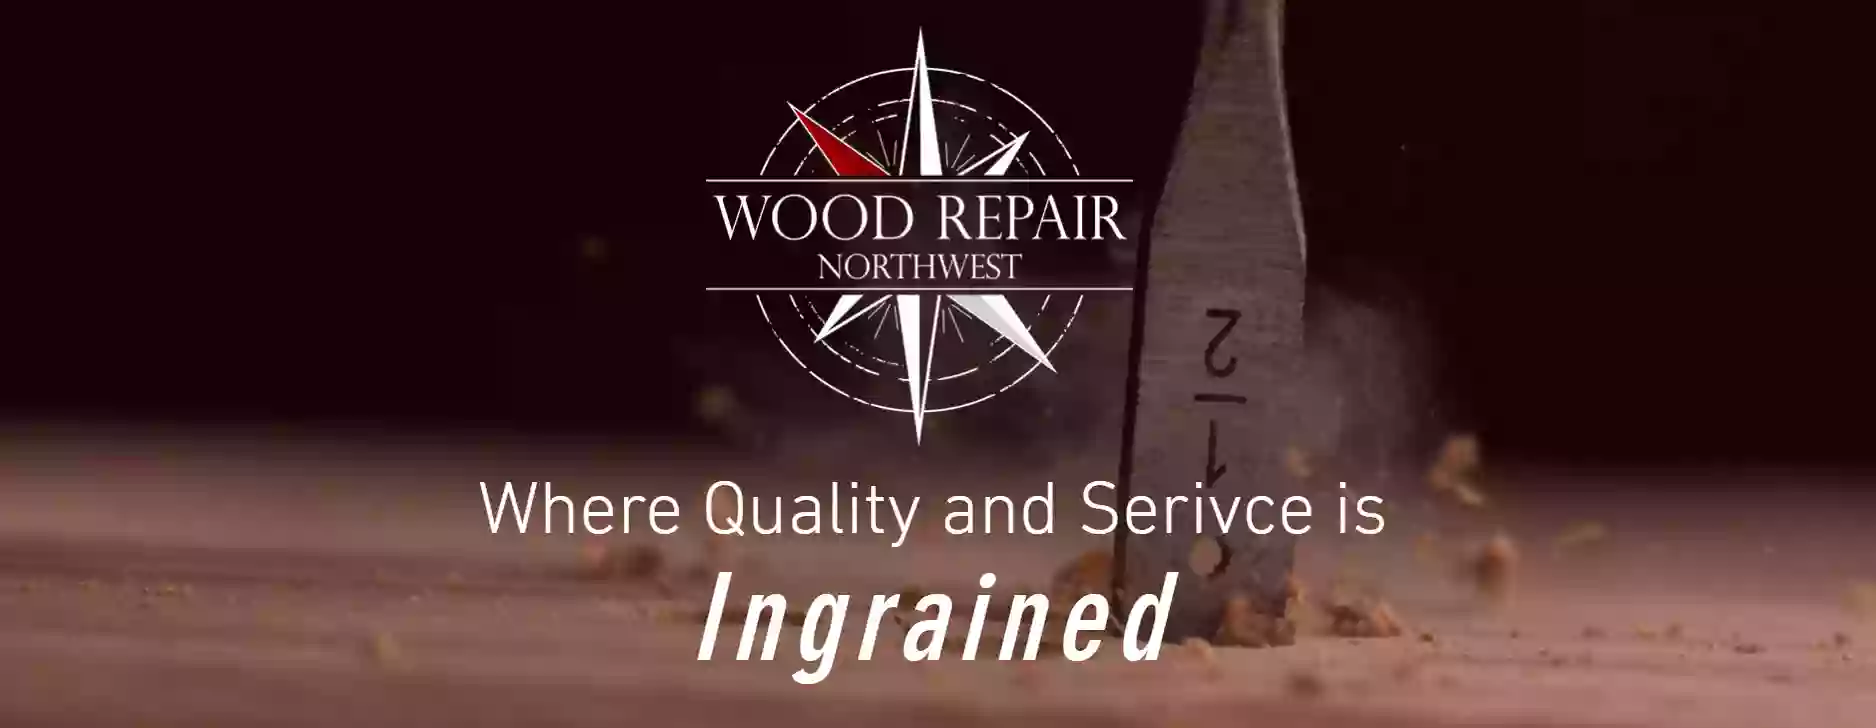 Wood Repair Northwest, LLC